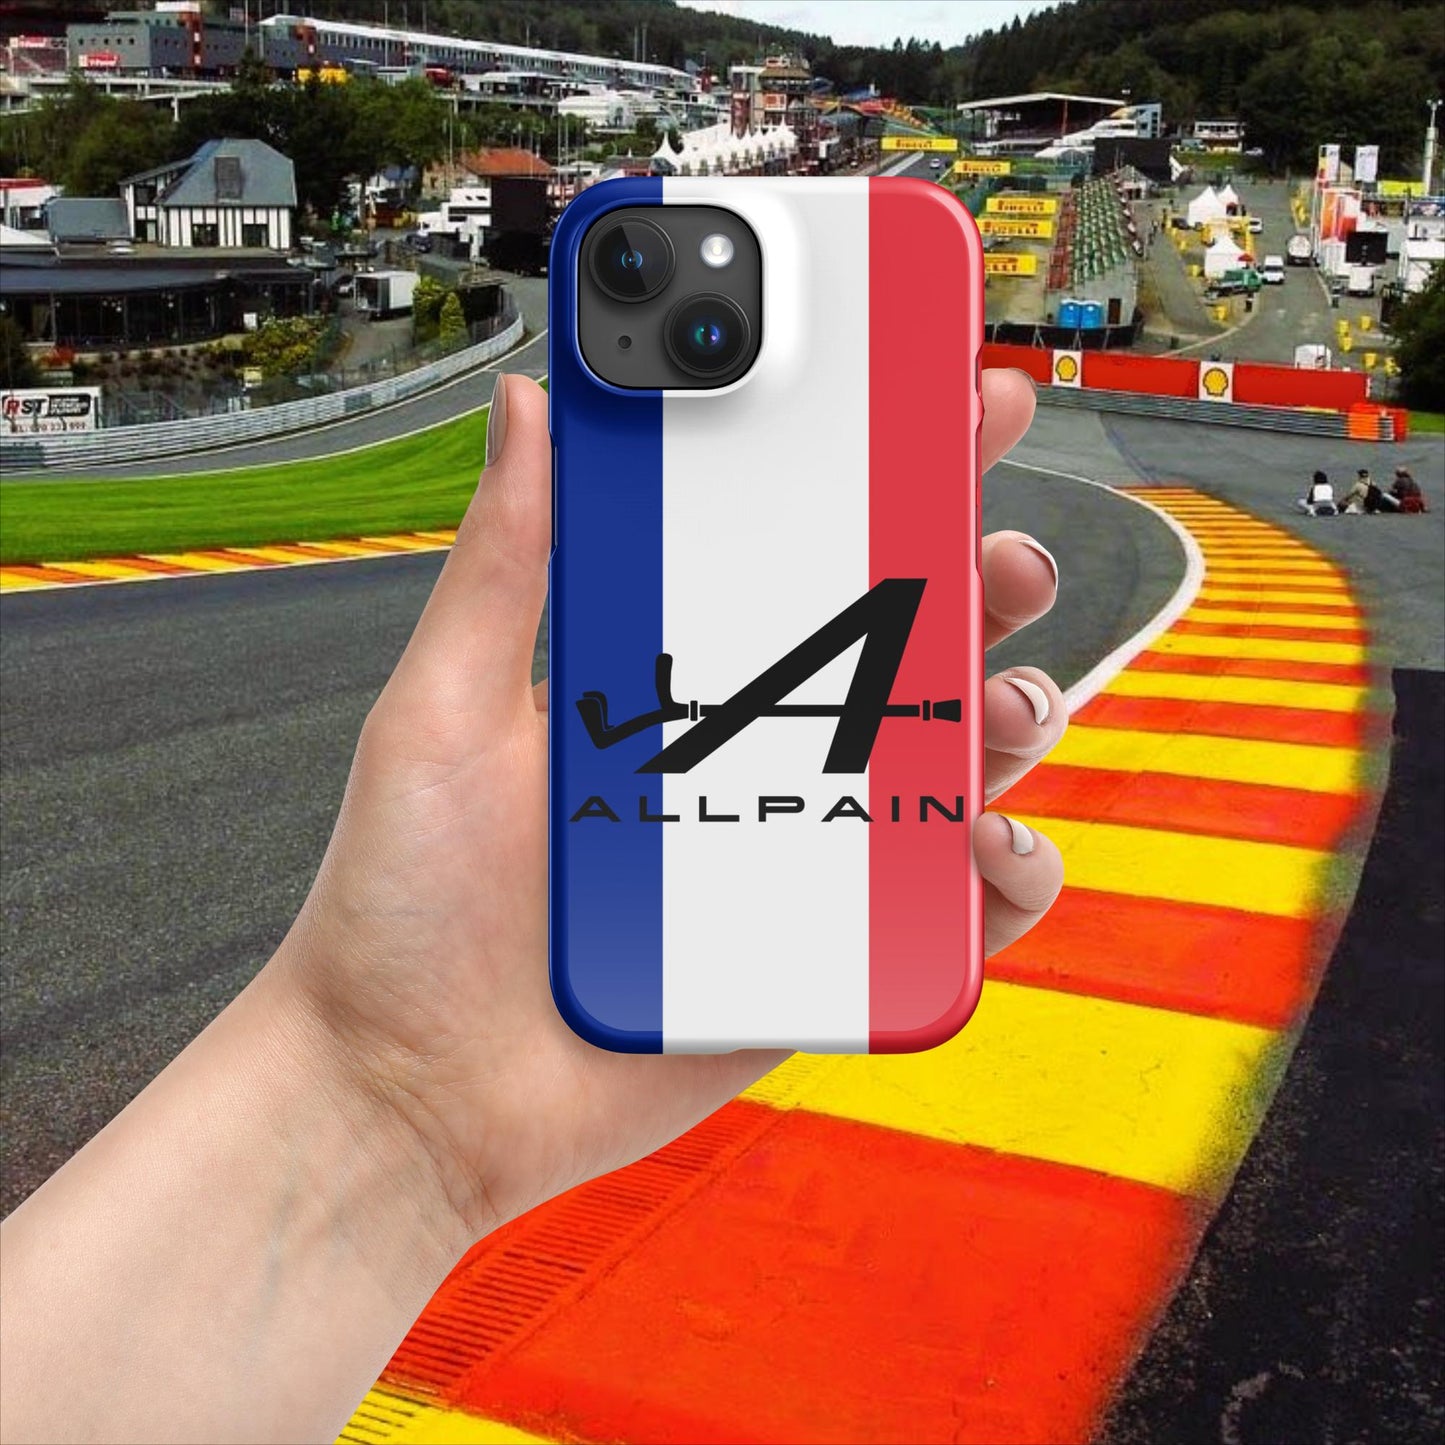 Allpain Alpine F1 Formula 1 Pierre Gasly Esteban Ocon Alpine Snap case for iPhone Next Cult Brand Alpine, F1